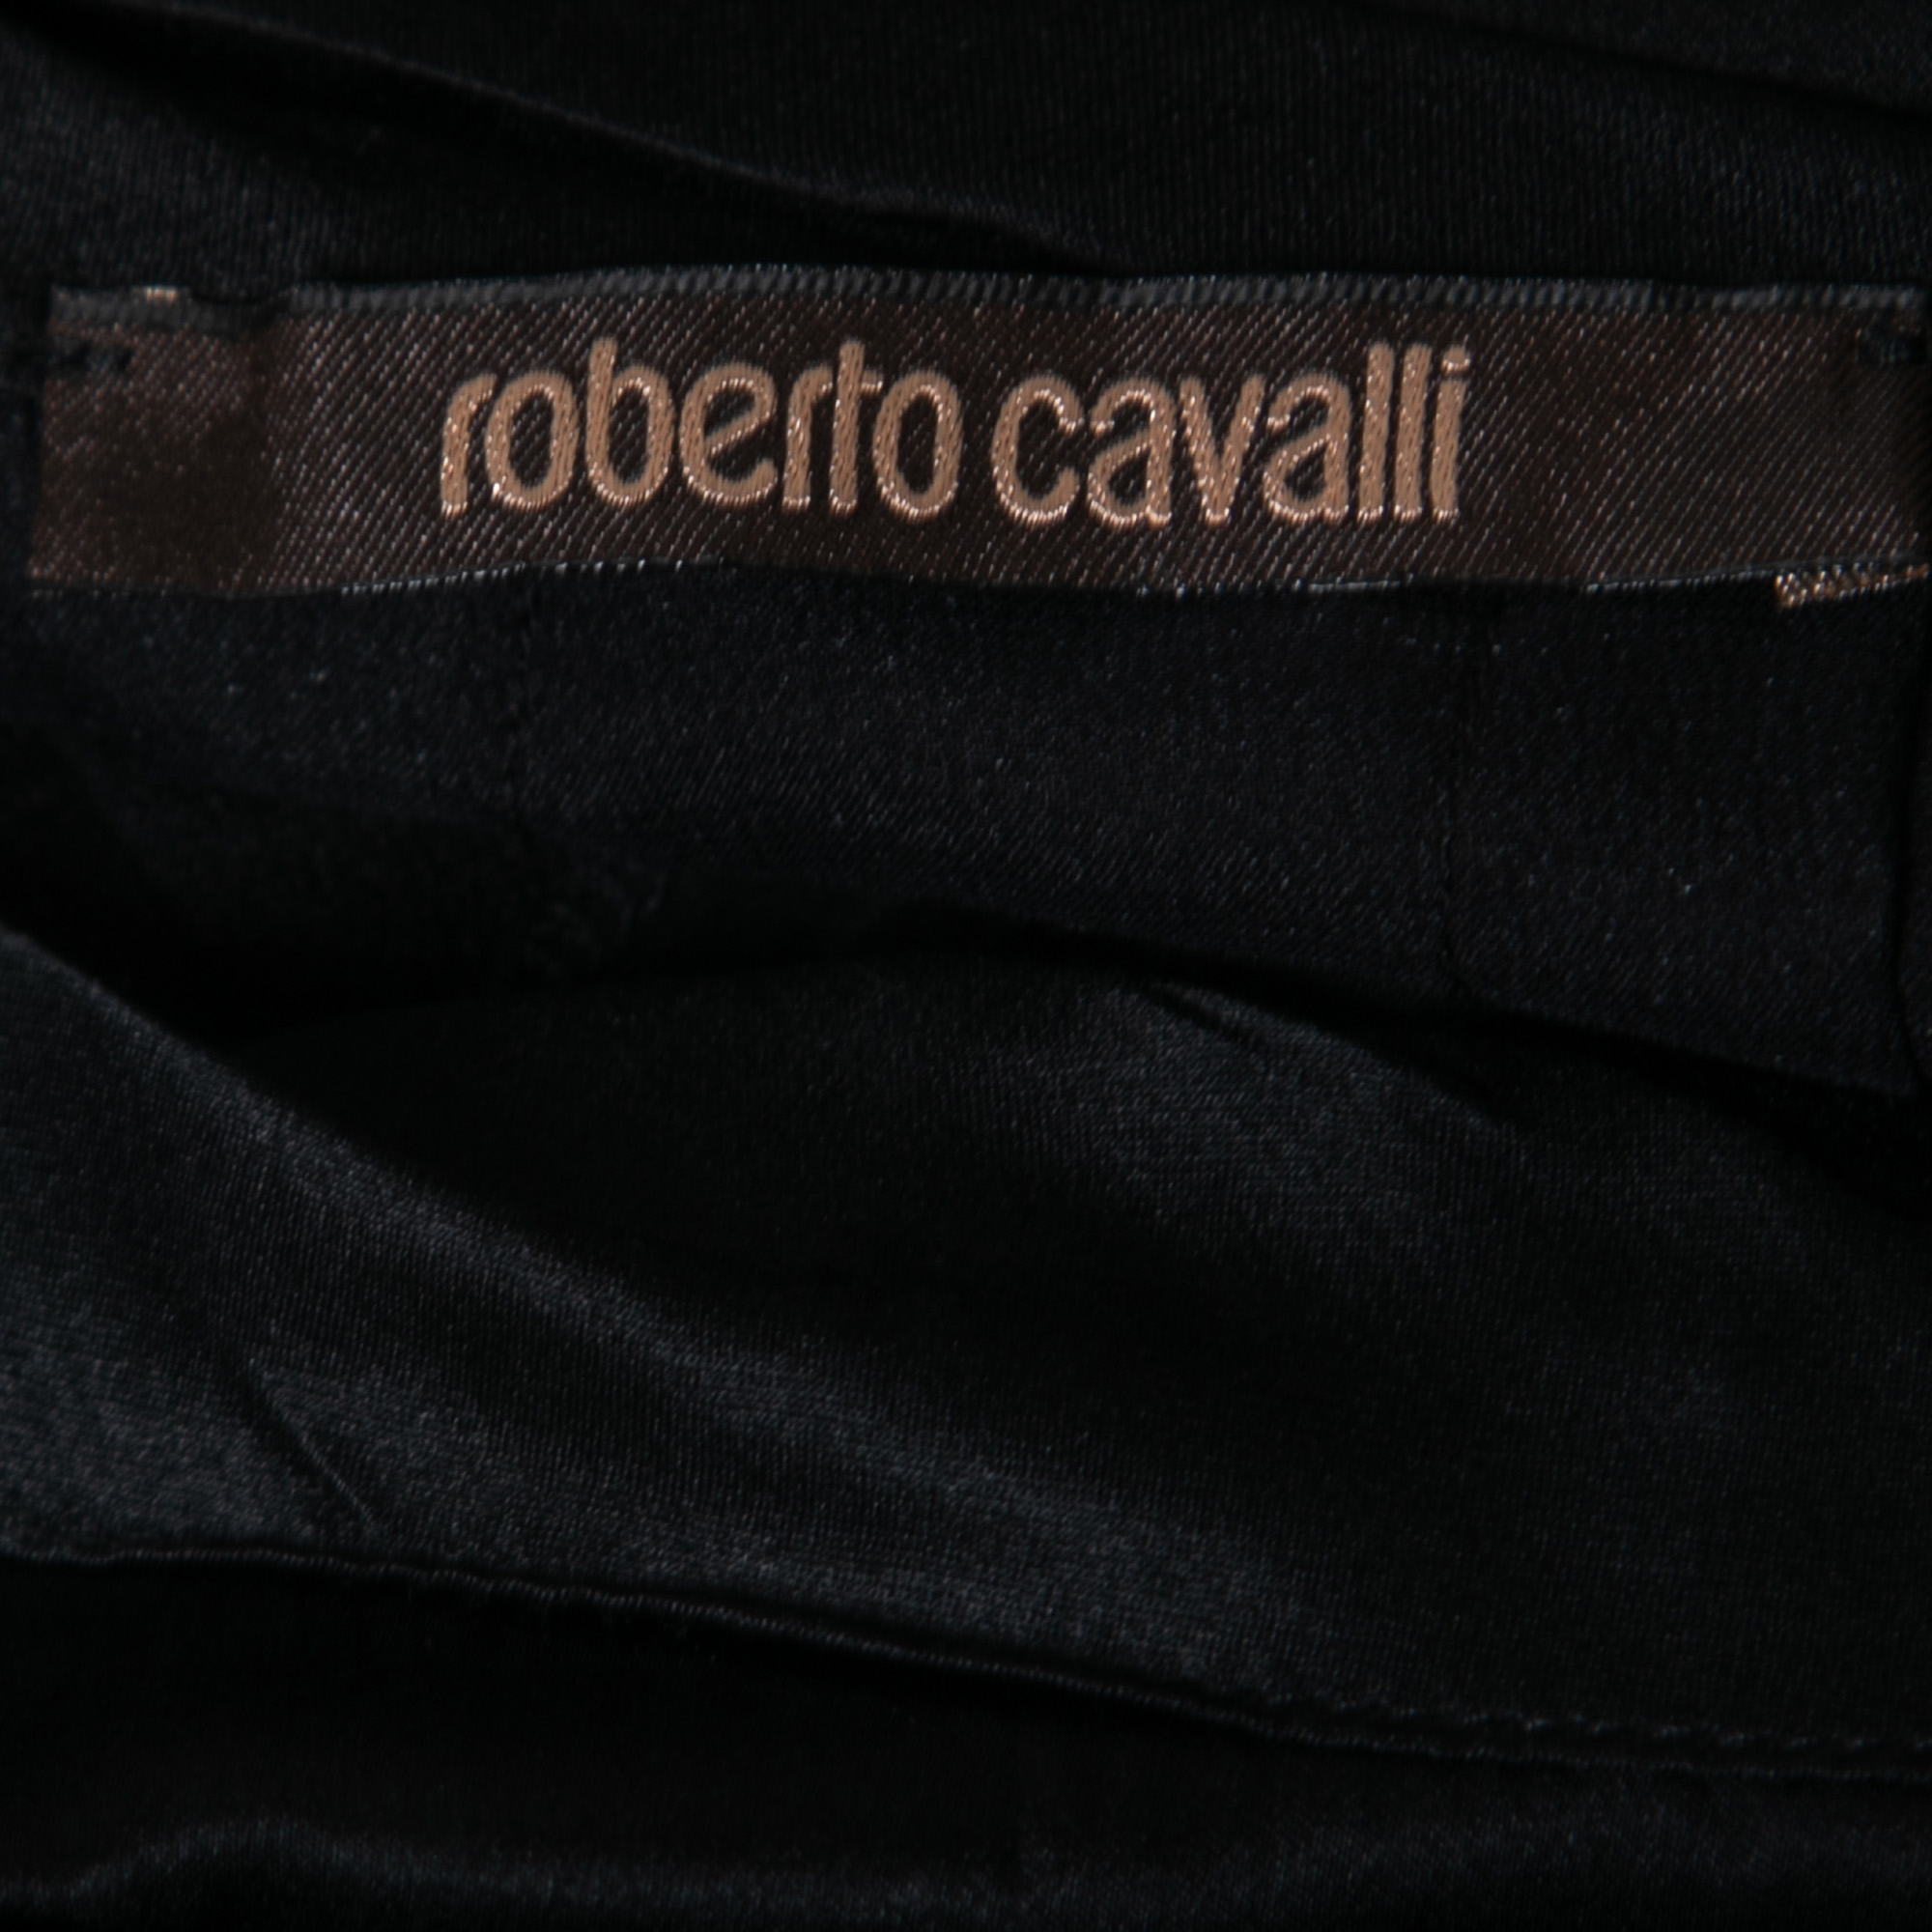 Roberto Cavalli Black Floral Print Silk Belted Top S